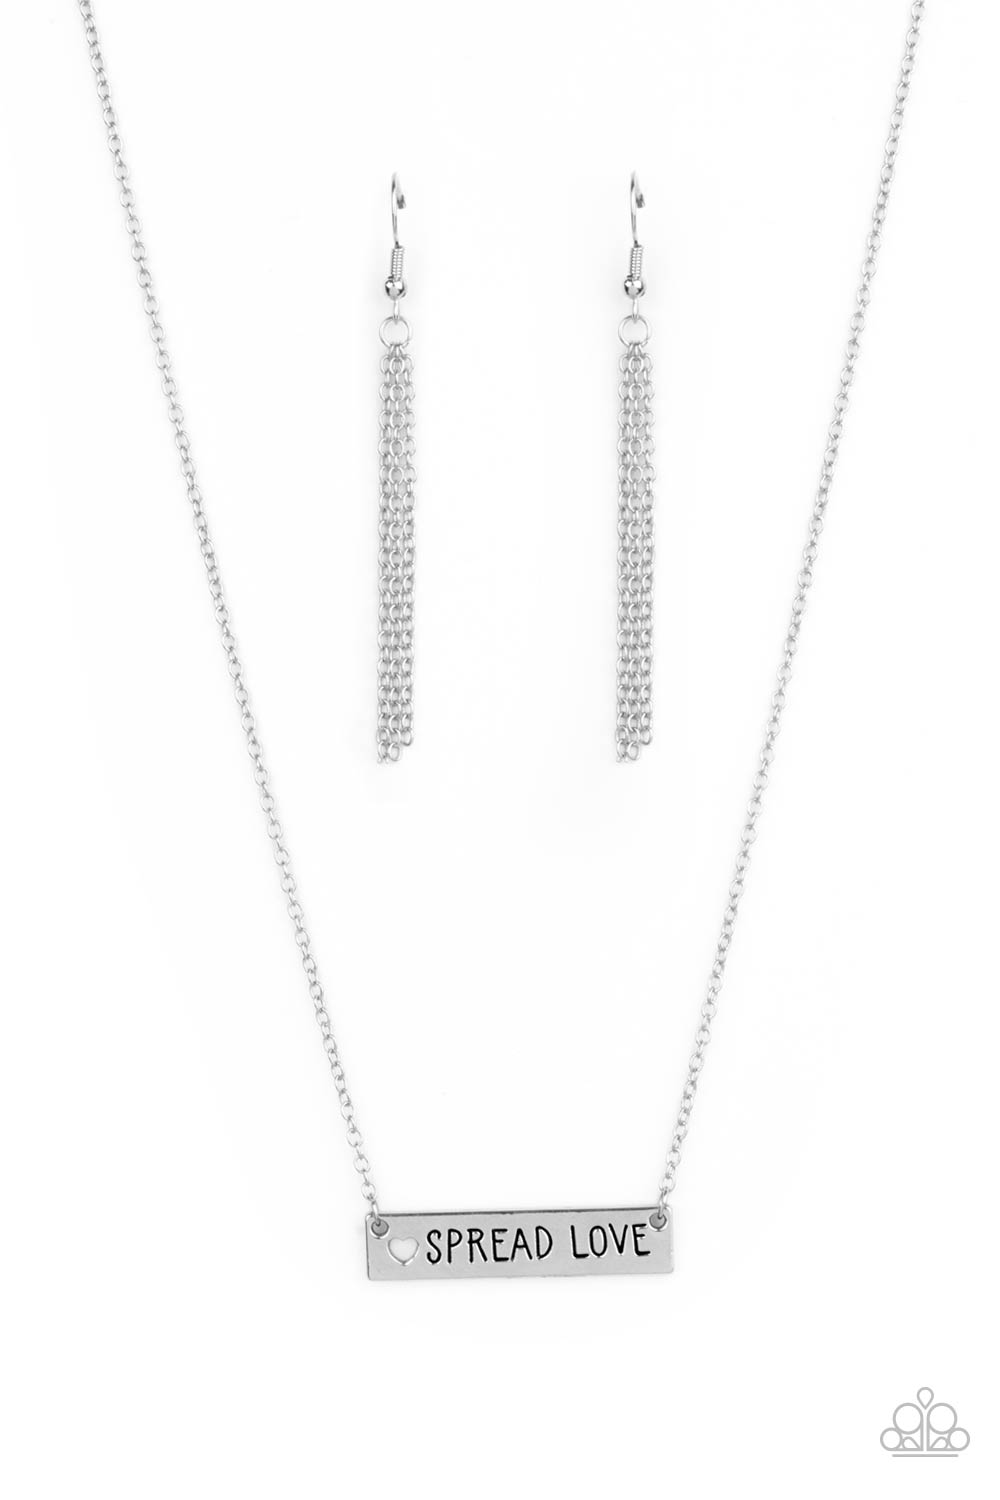 Spread Love - silver - Paparazzi necklace